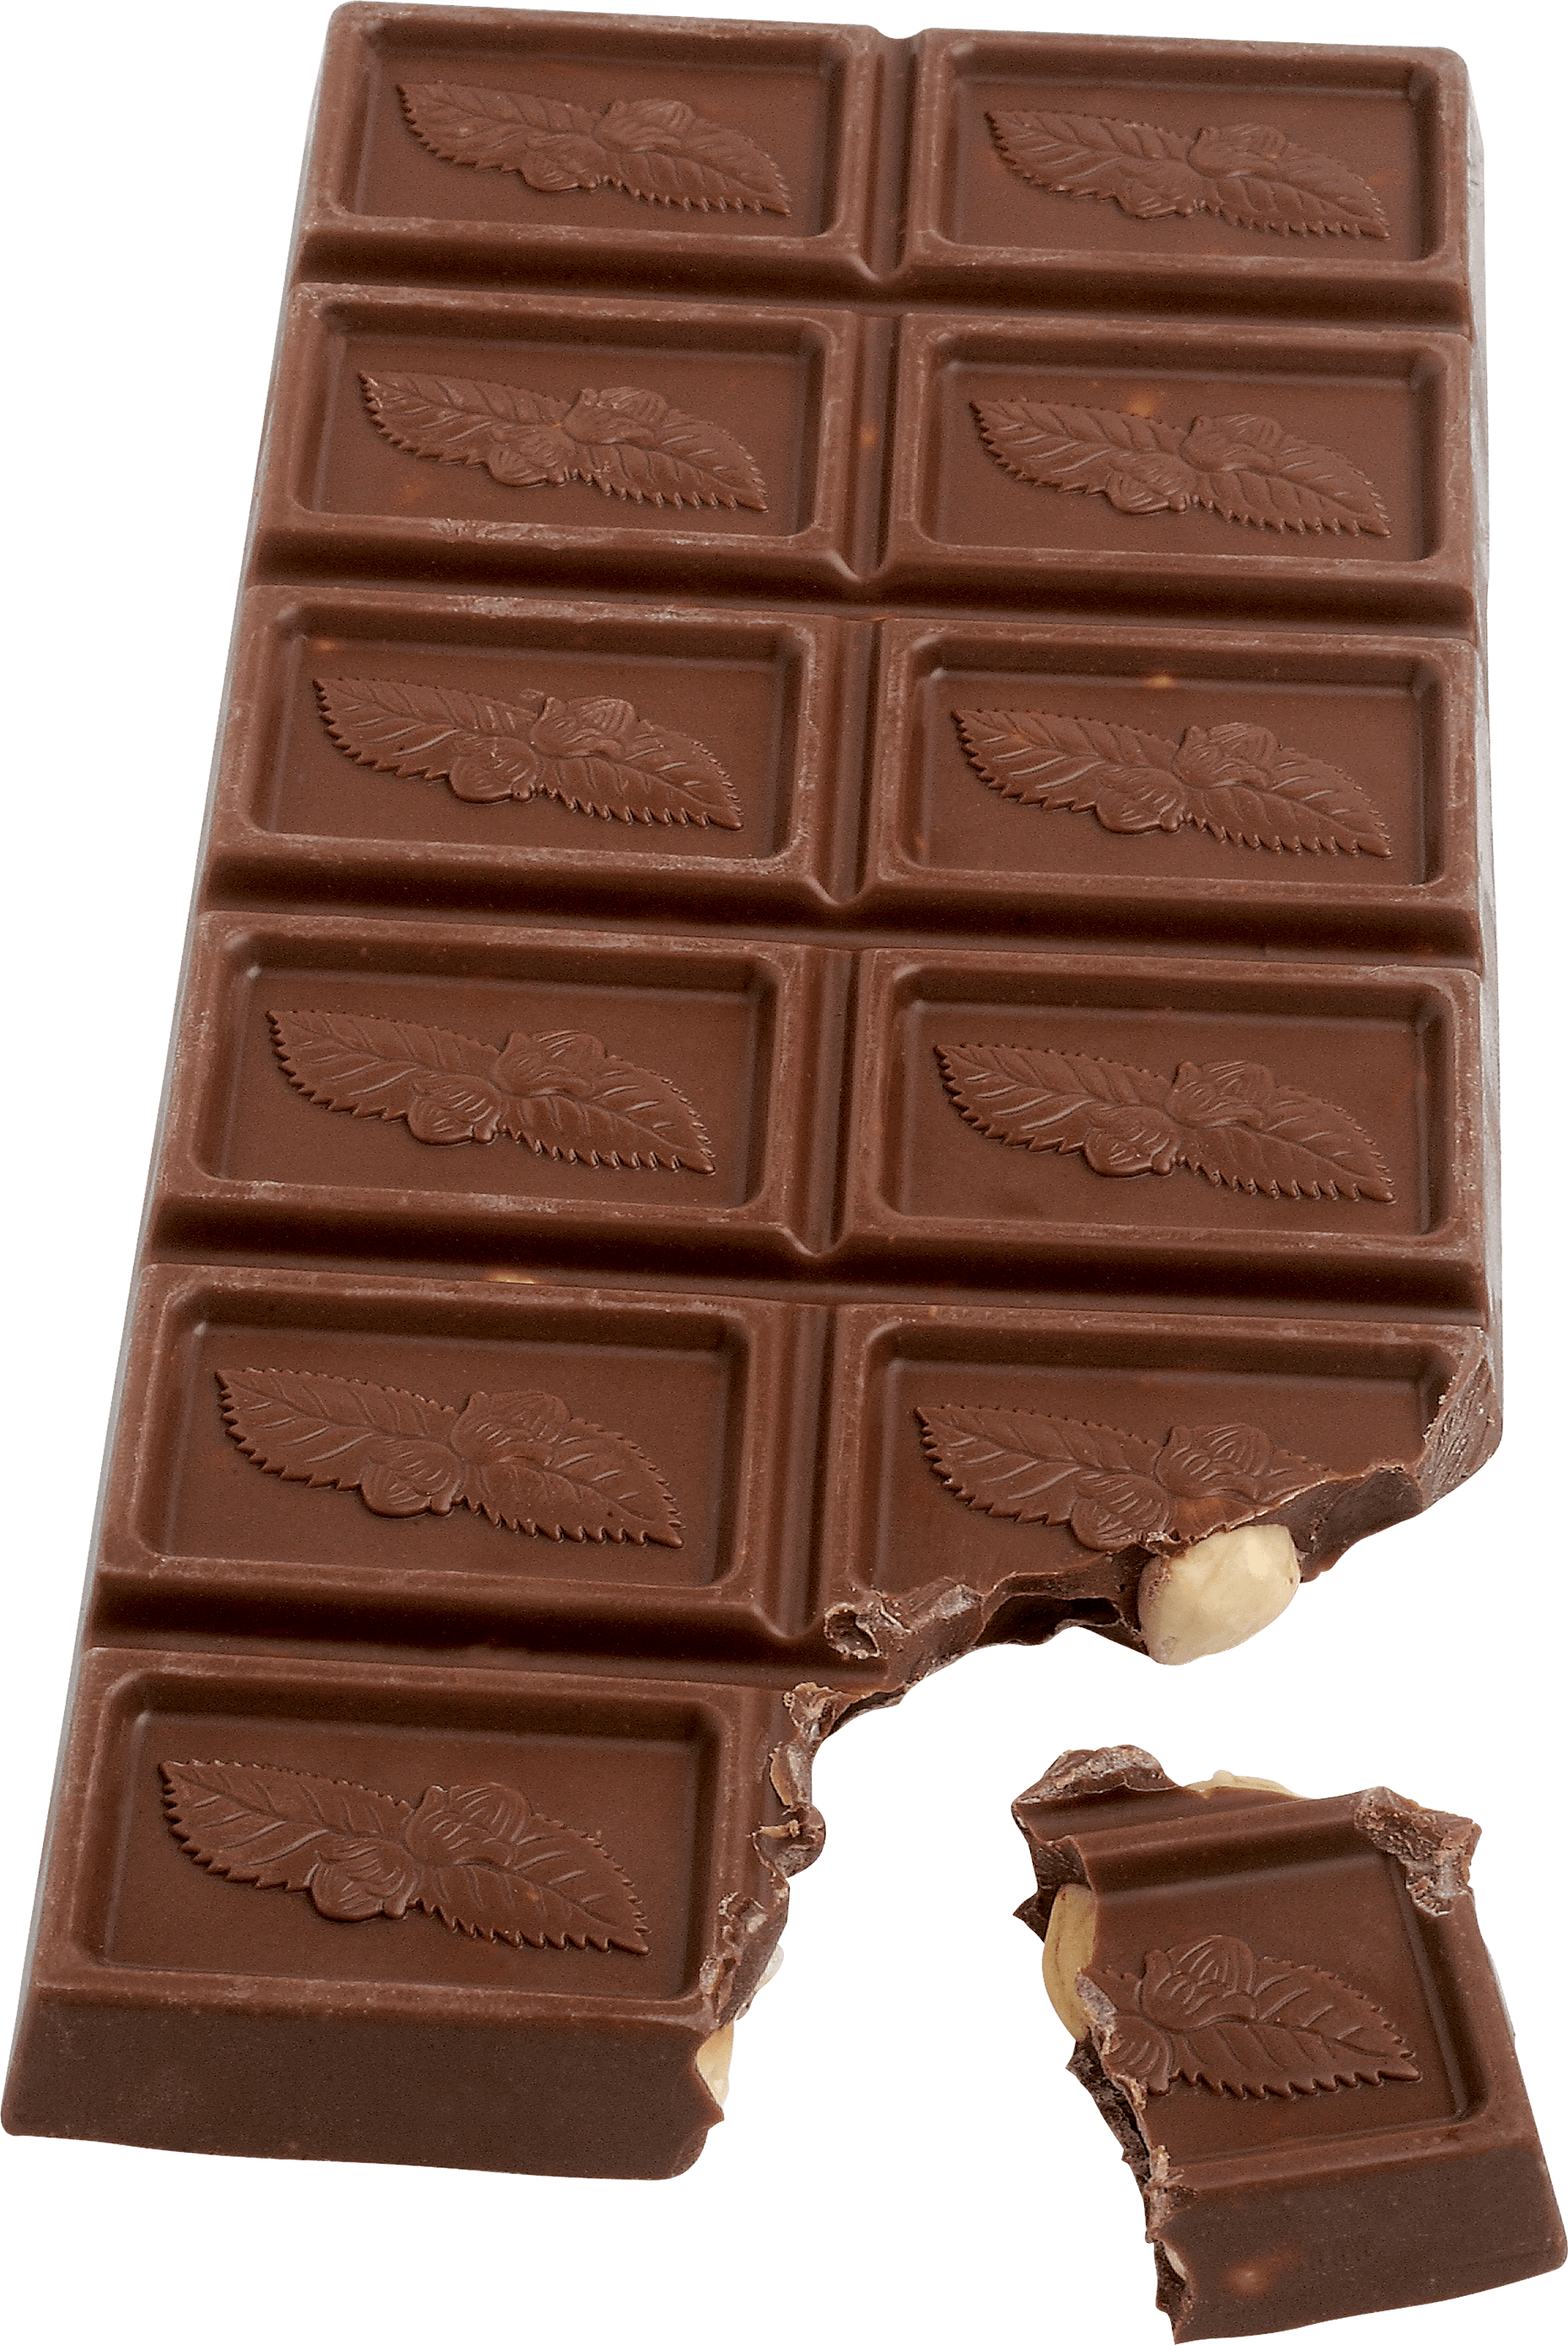 Chocolate bars PNG image